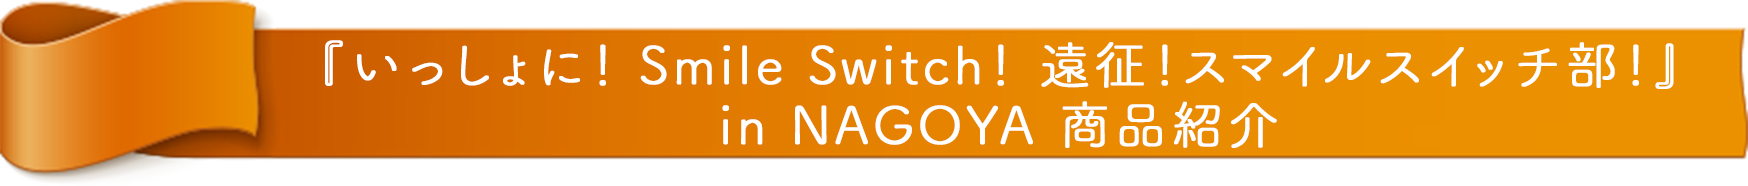 『FUJIYA いっしょに！ Smile Switch！ 遠征！スマイルスイッチ部！ in NAGOYA』 商品紹介